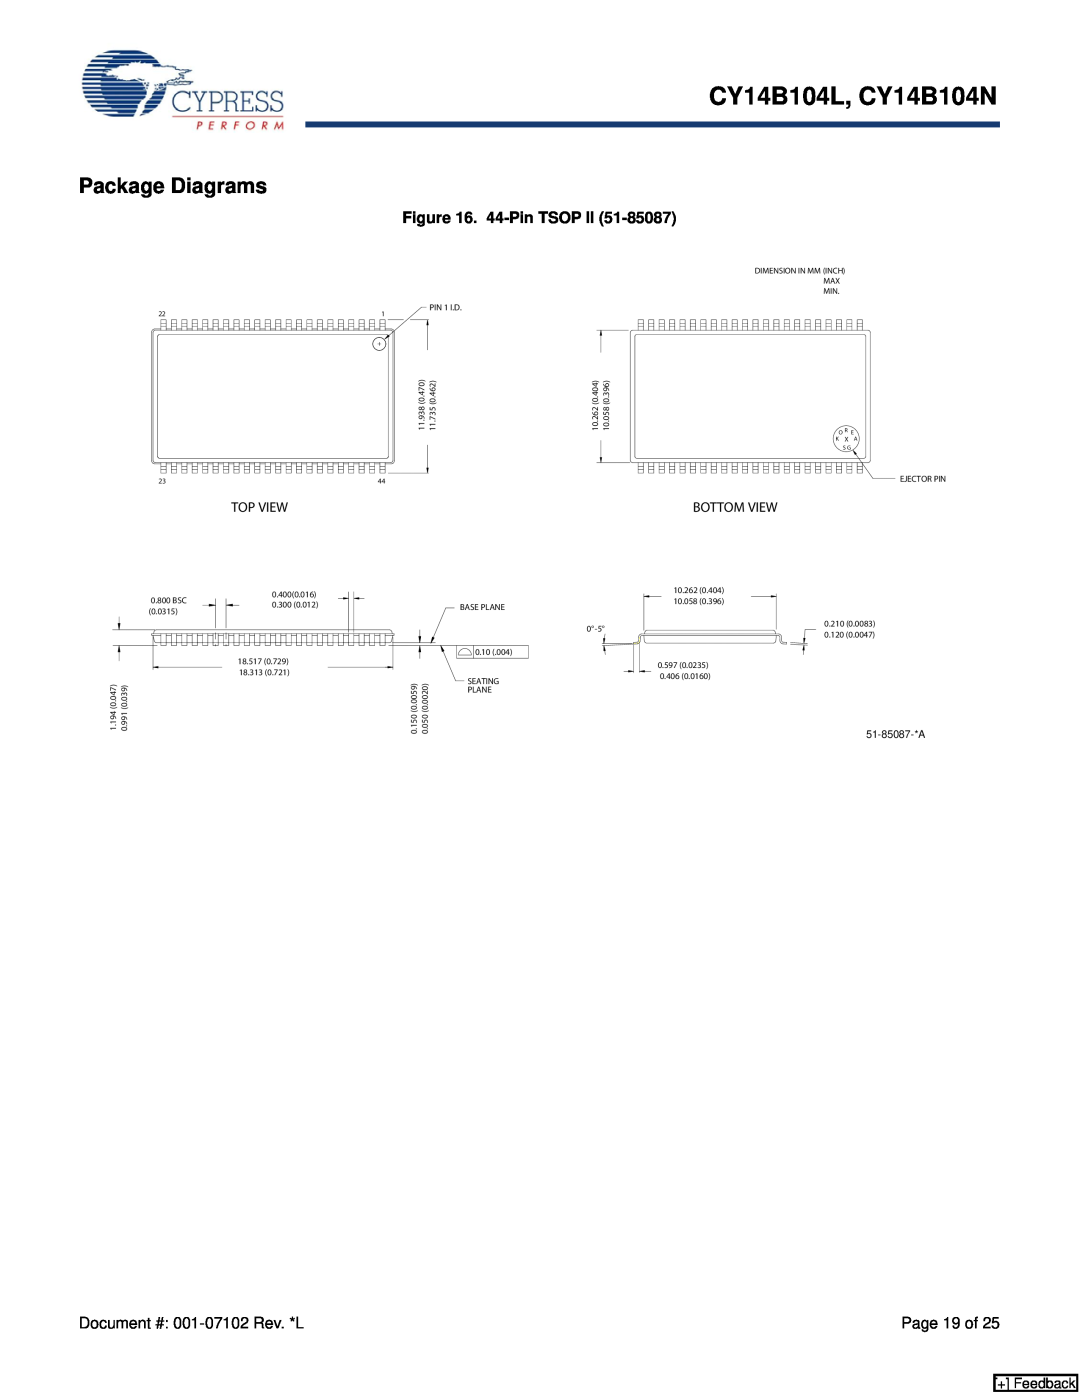 Cypress manual Package Diagrams, 44-Pin TSOP II, CY14B104L, CY14B104N, + Feedback 